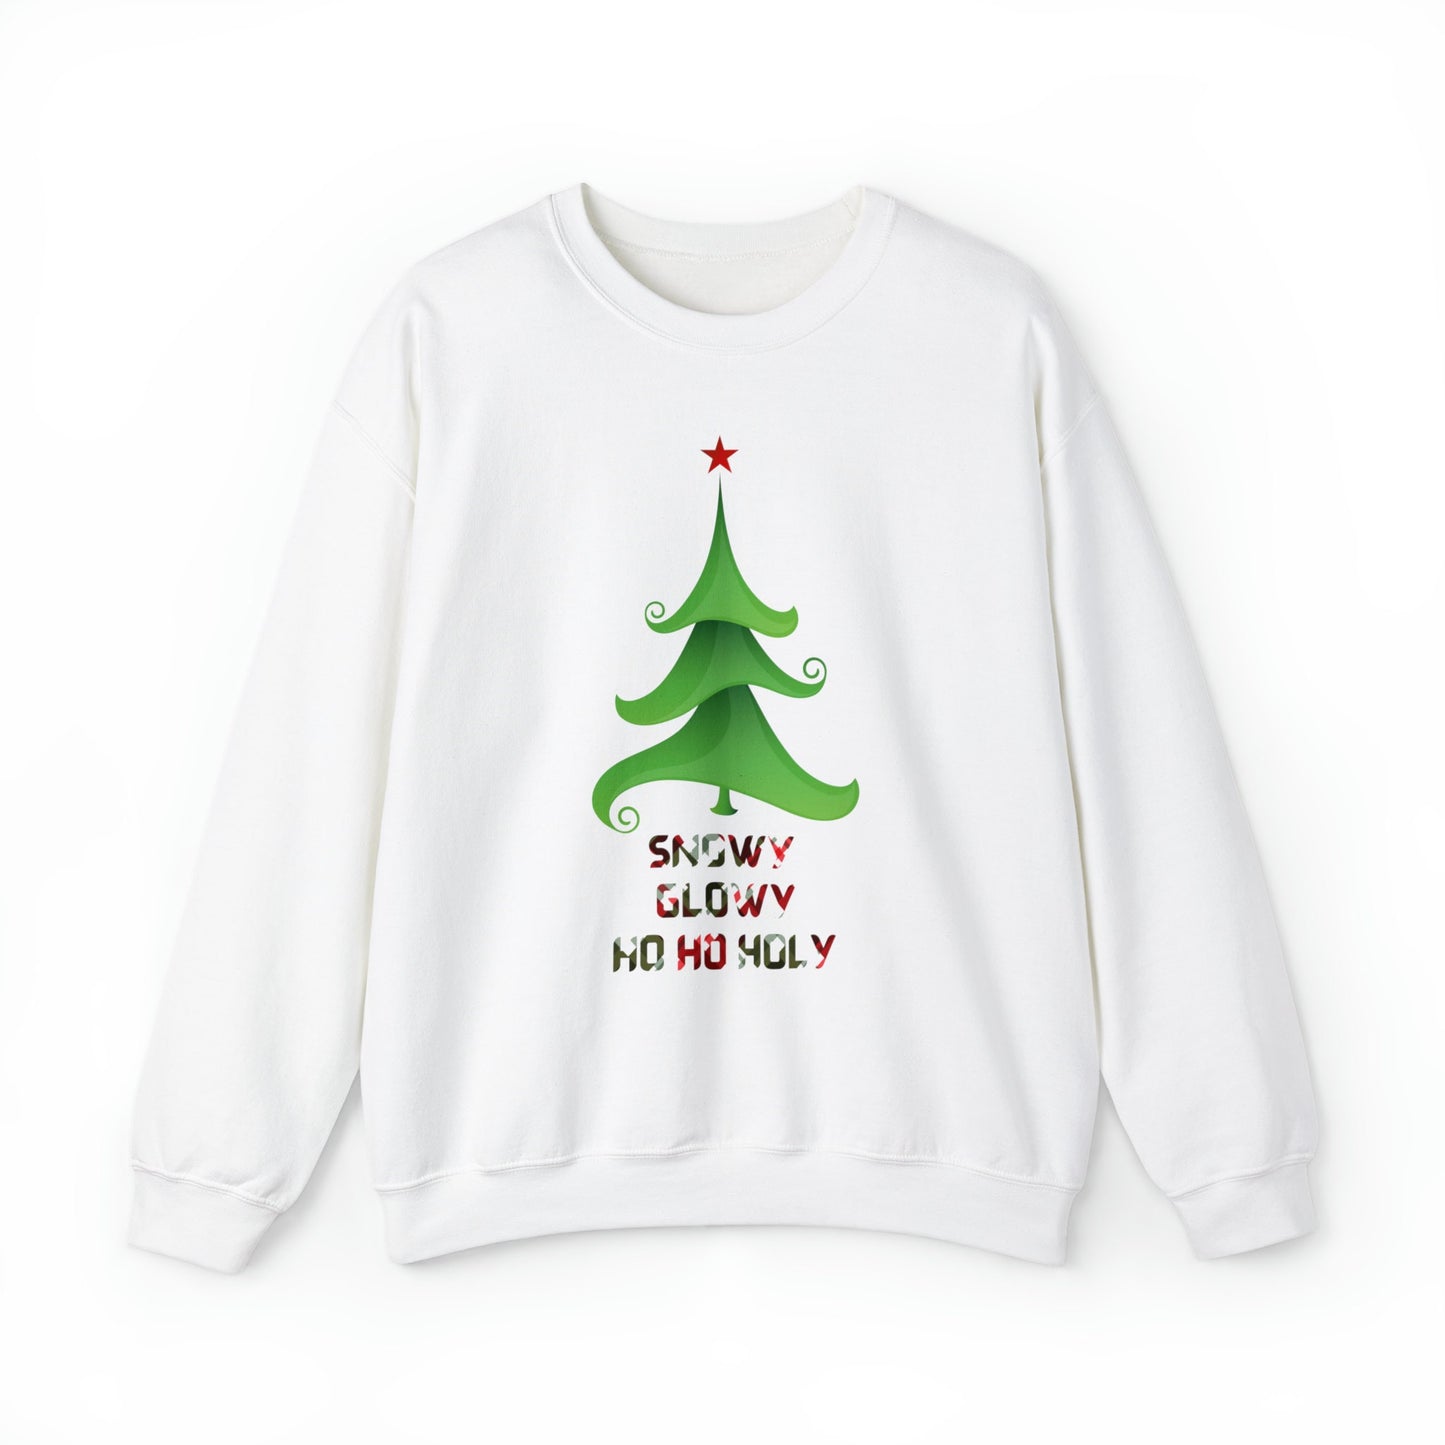 Christmas Sweatshirt, Merry Christmas, Holiday Shirt, Ugly Sweater, Winter Shirt, Gift for Her, Funny Holiday Shirt